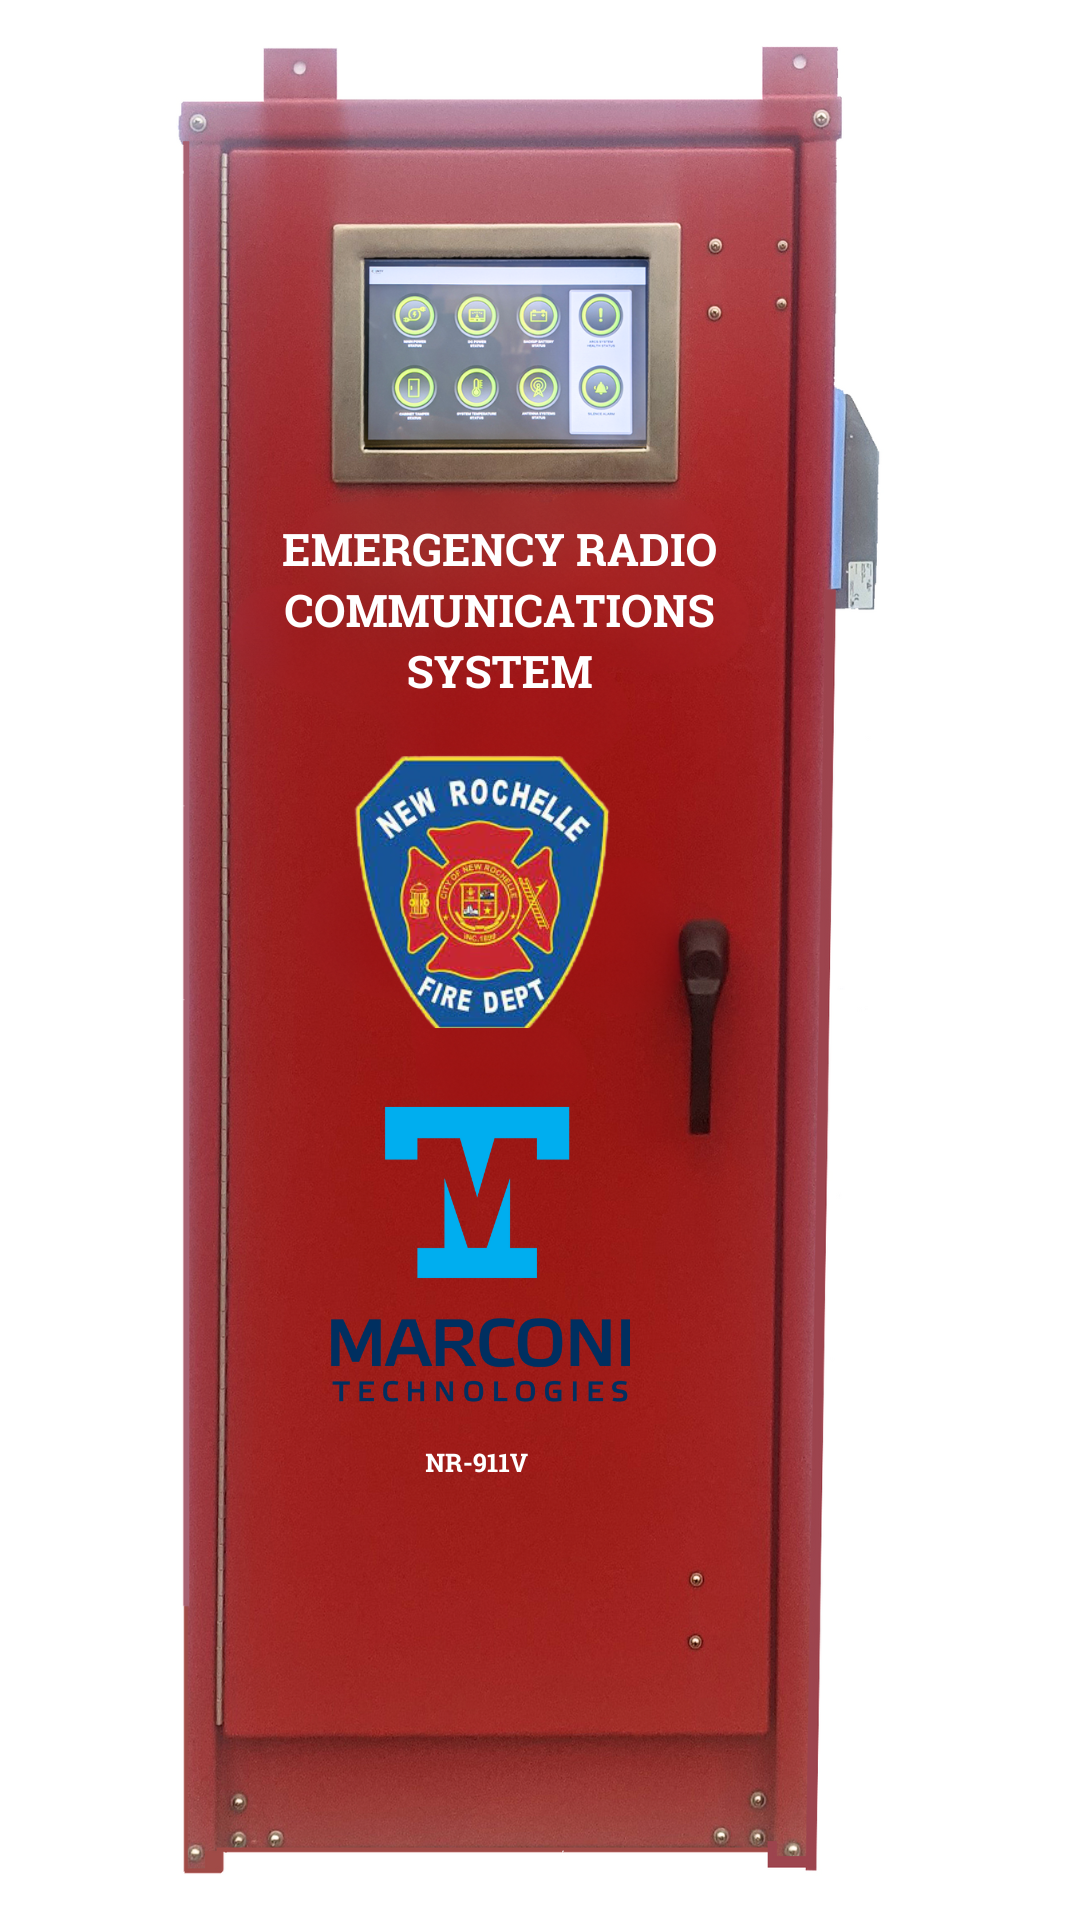 EMERGENCY RADIO Communications SYSTEM